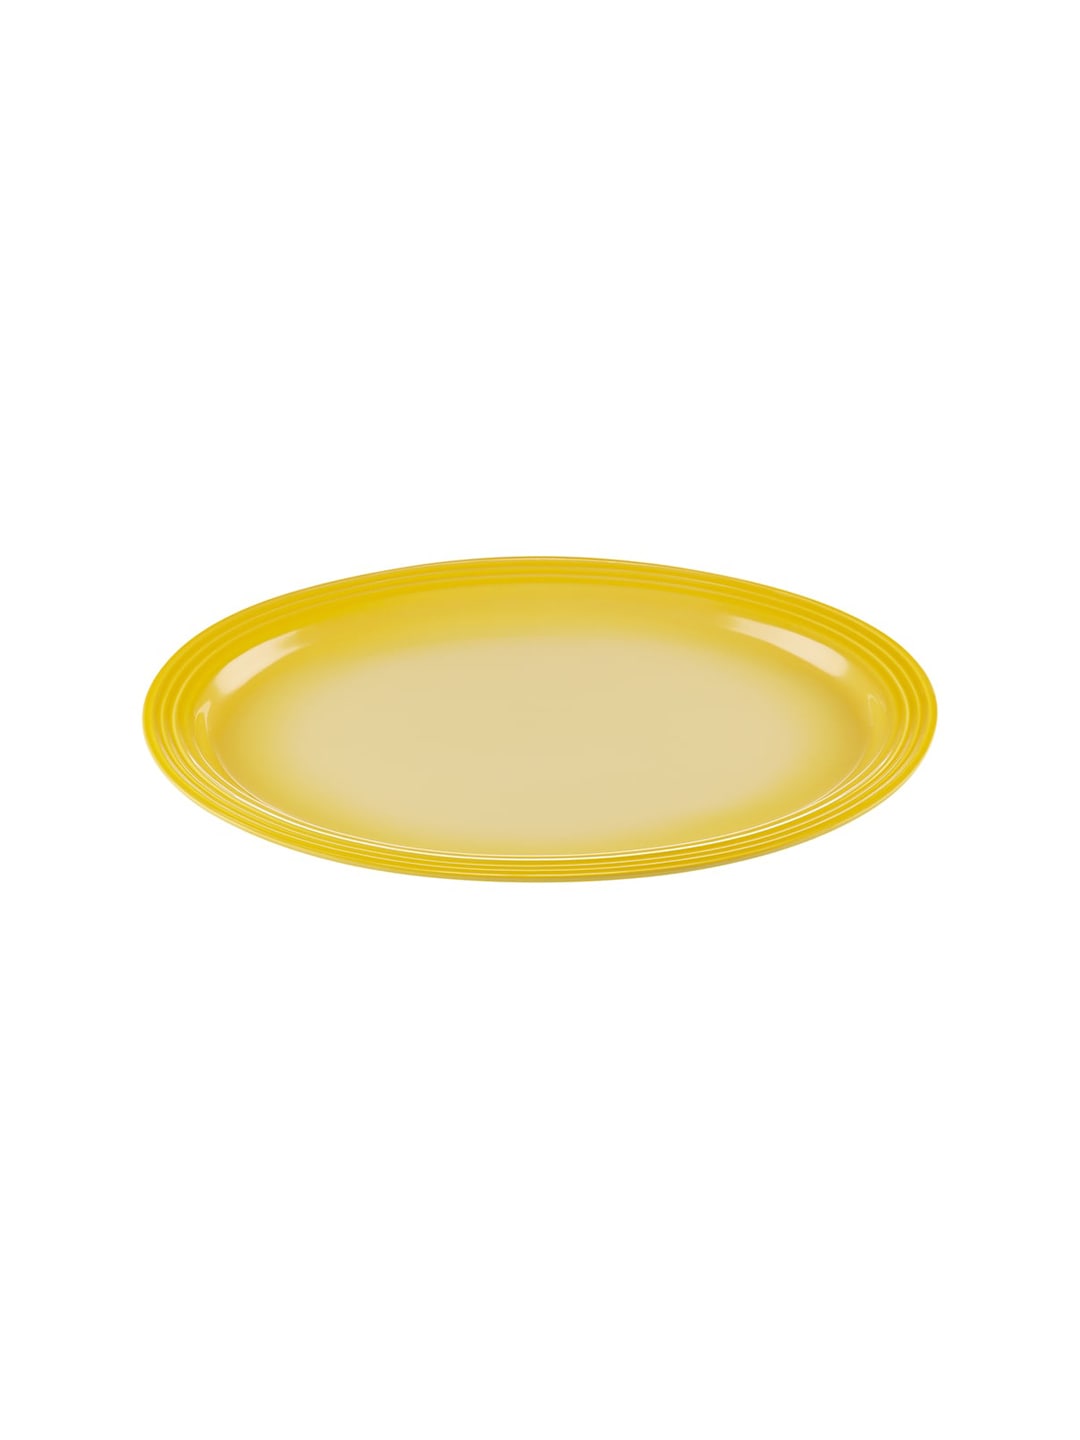 LE CREUSET Yellow Solid Ceramic Platter Price in India